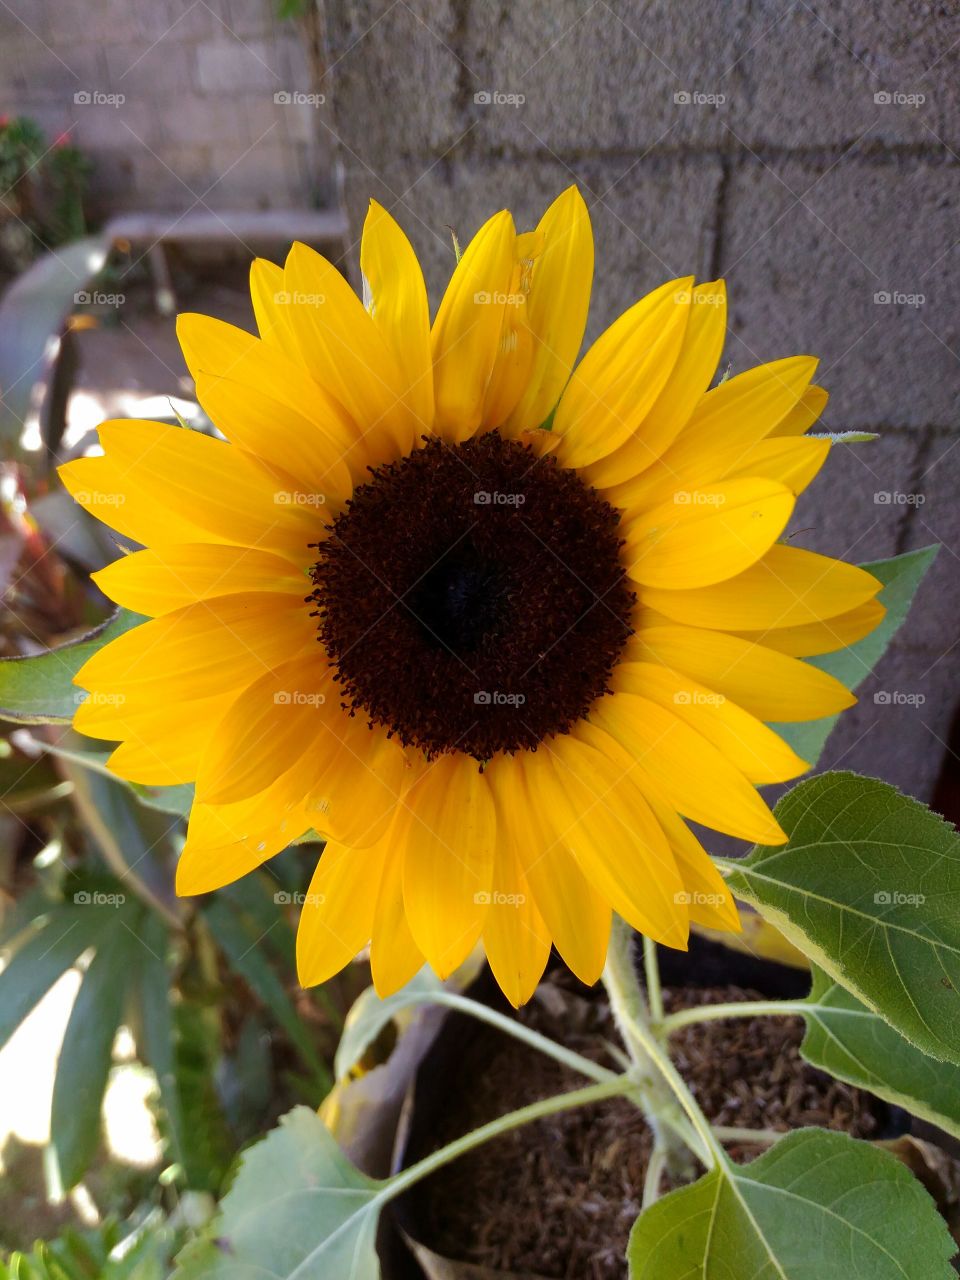 The Happy Sunflower